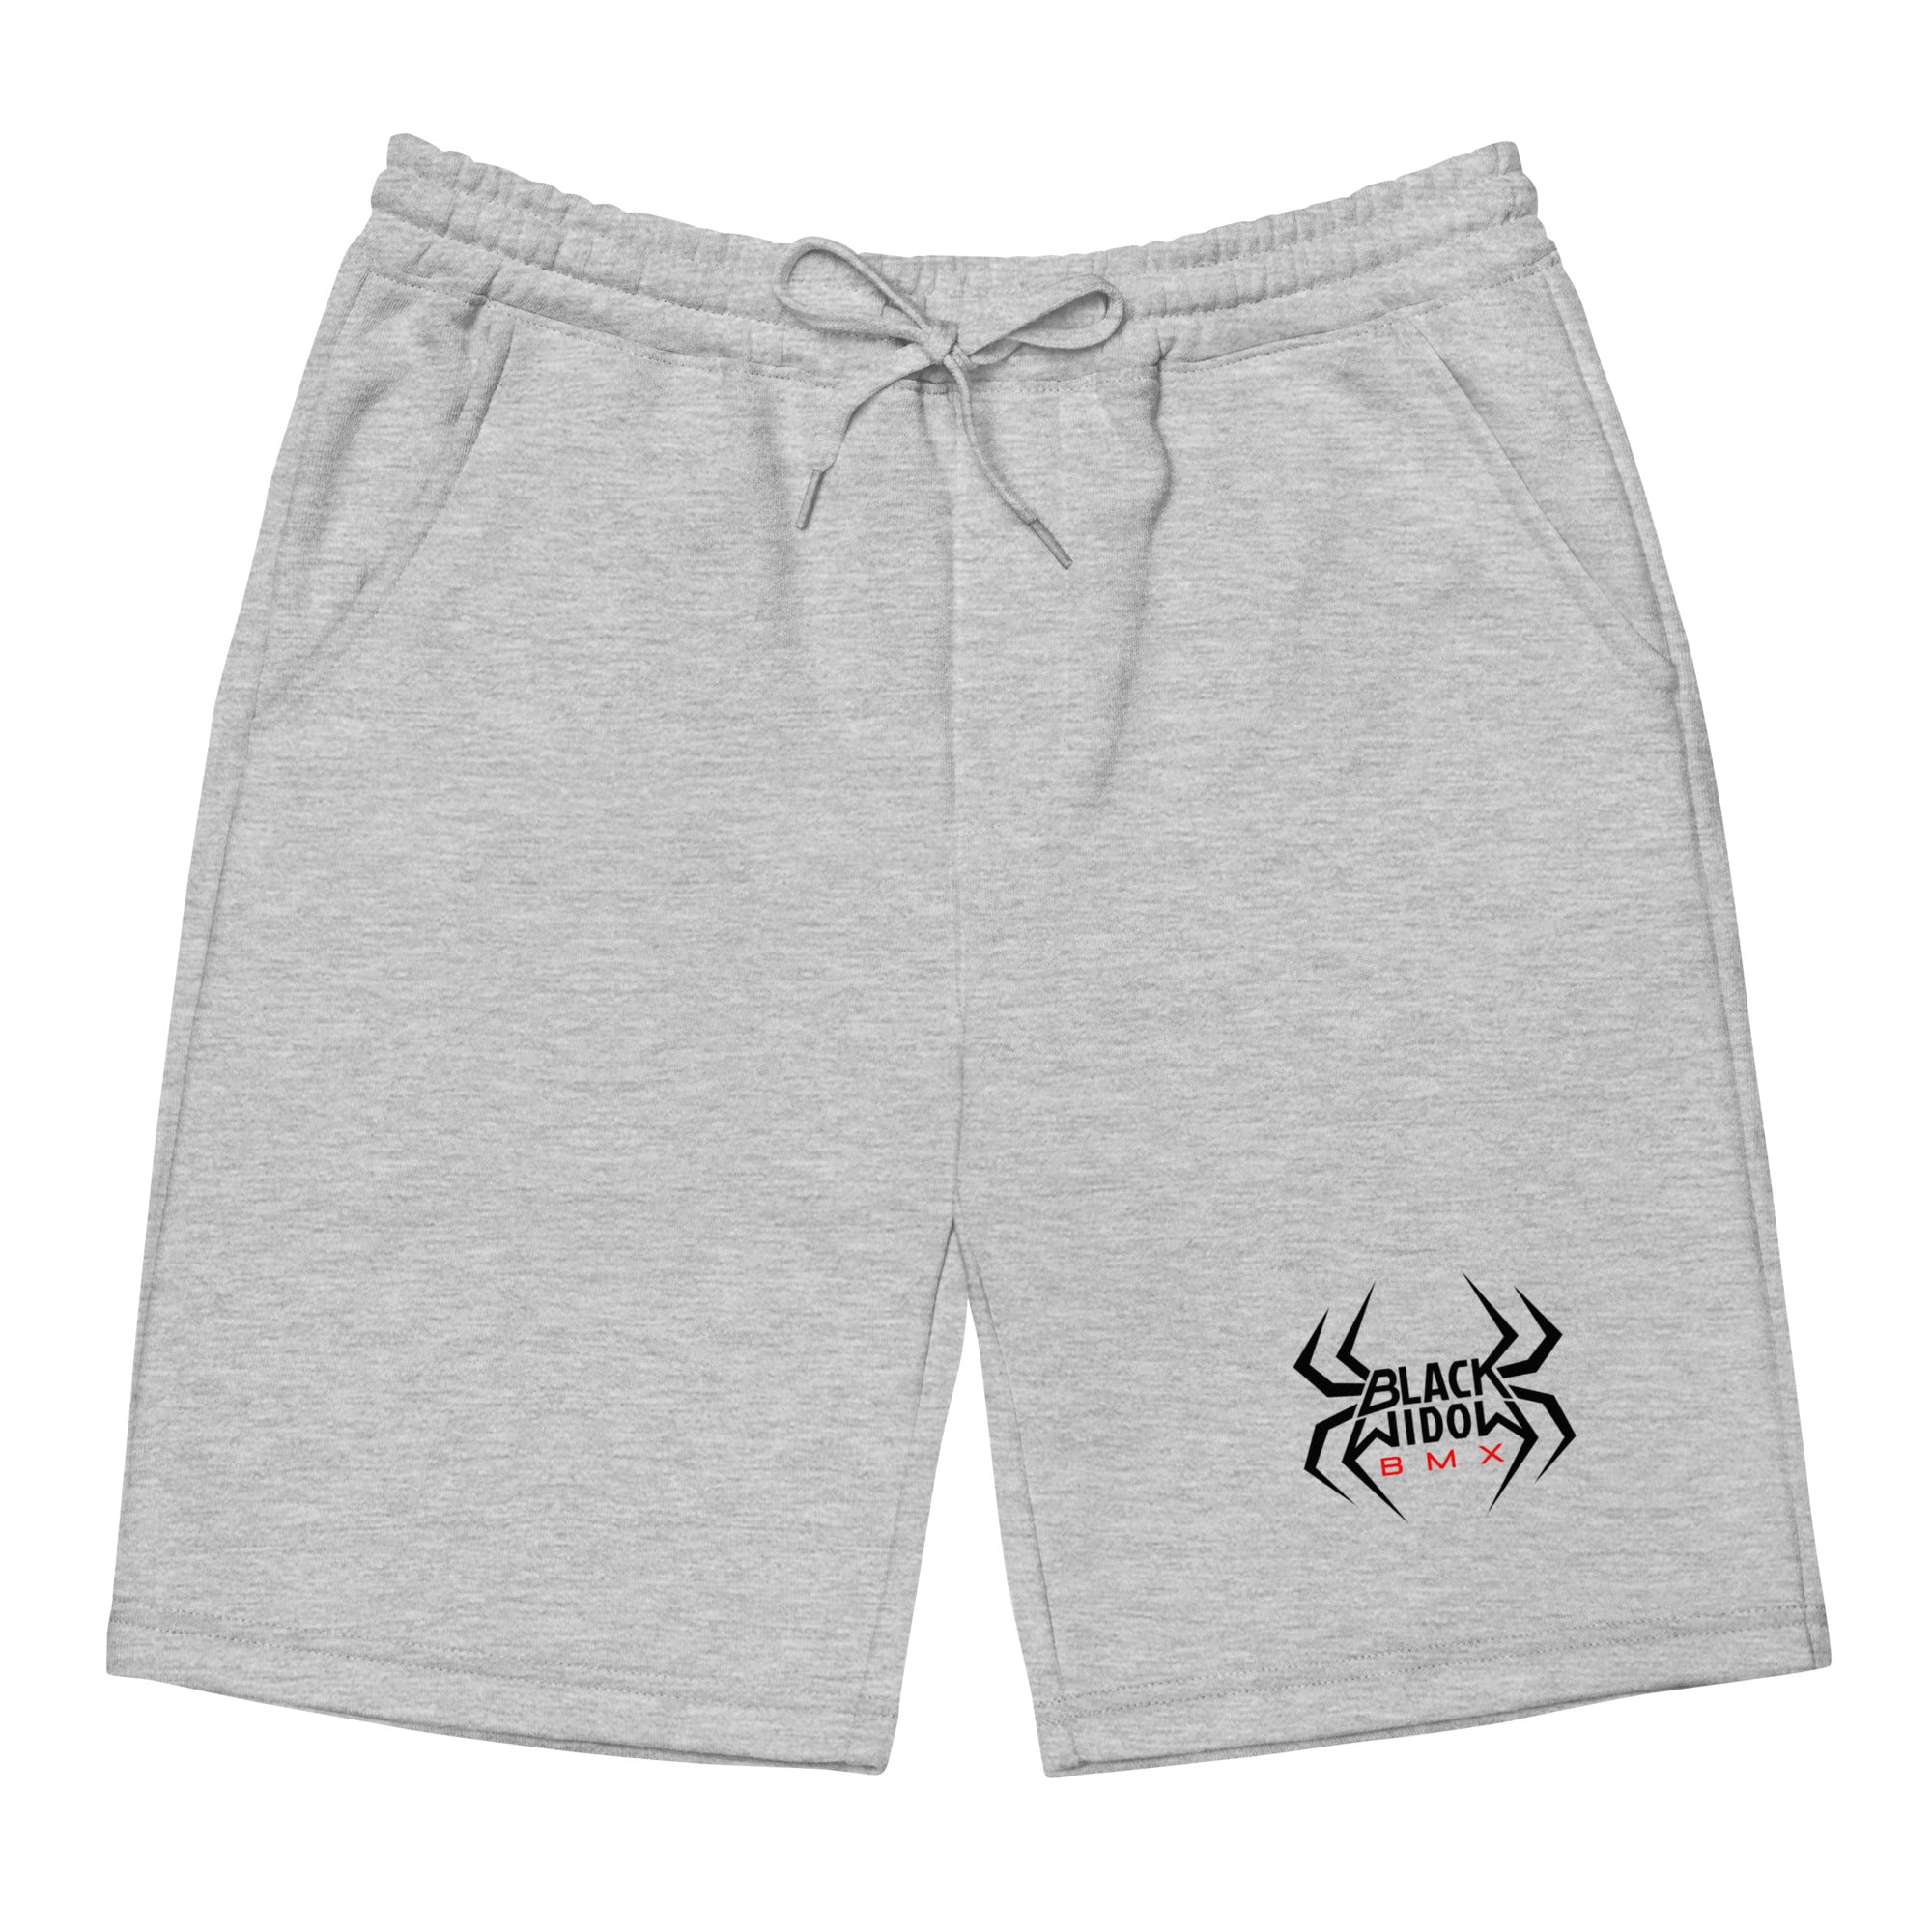 BW Men's fleece shorts